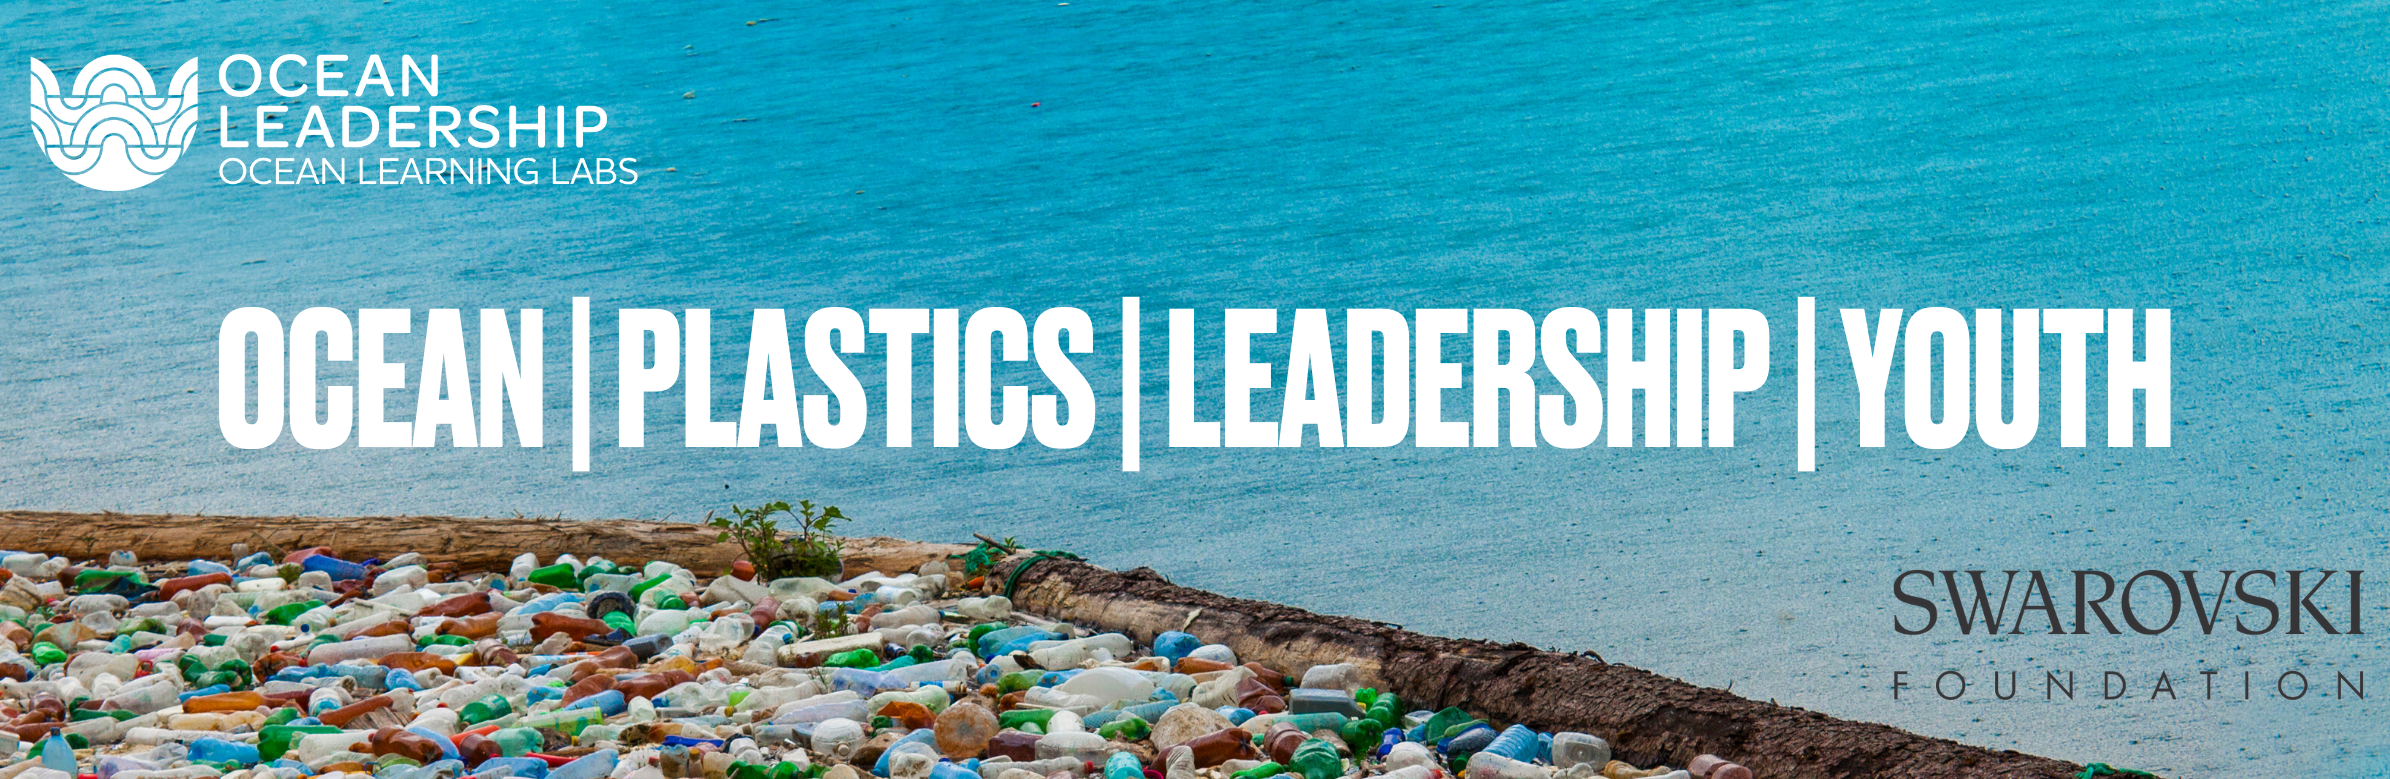 Ocean Plastics Leadership Youth Swarovski